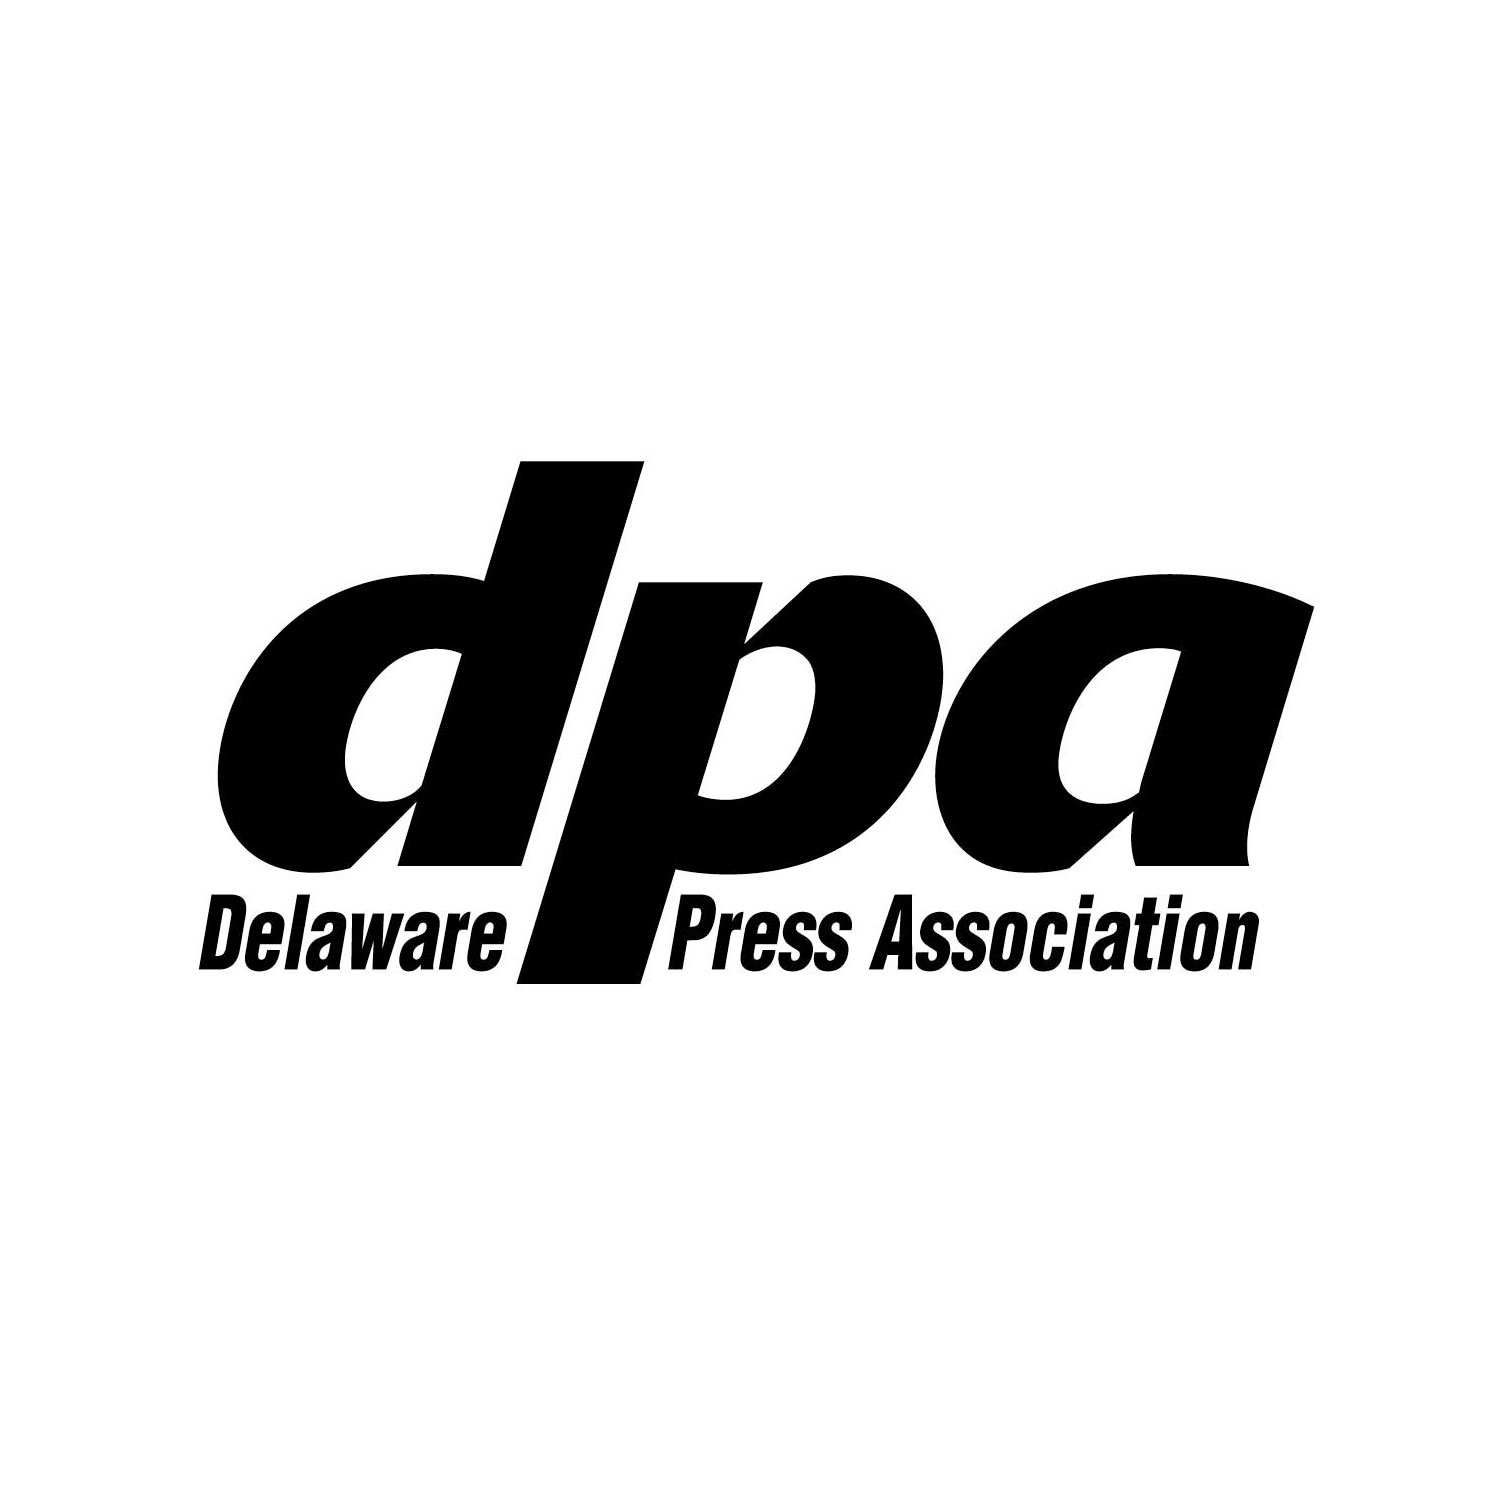 De pressed. Логотип dpa. Dpa агентство. Deutsche presse-Agentur логотип. Эмблема dpa.